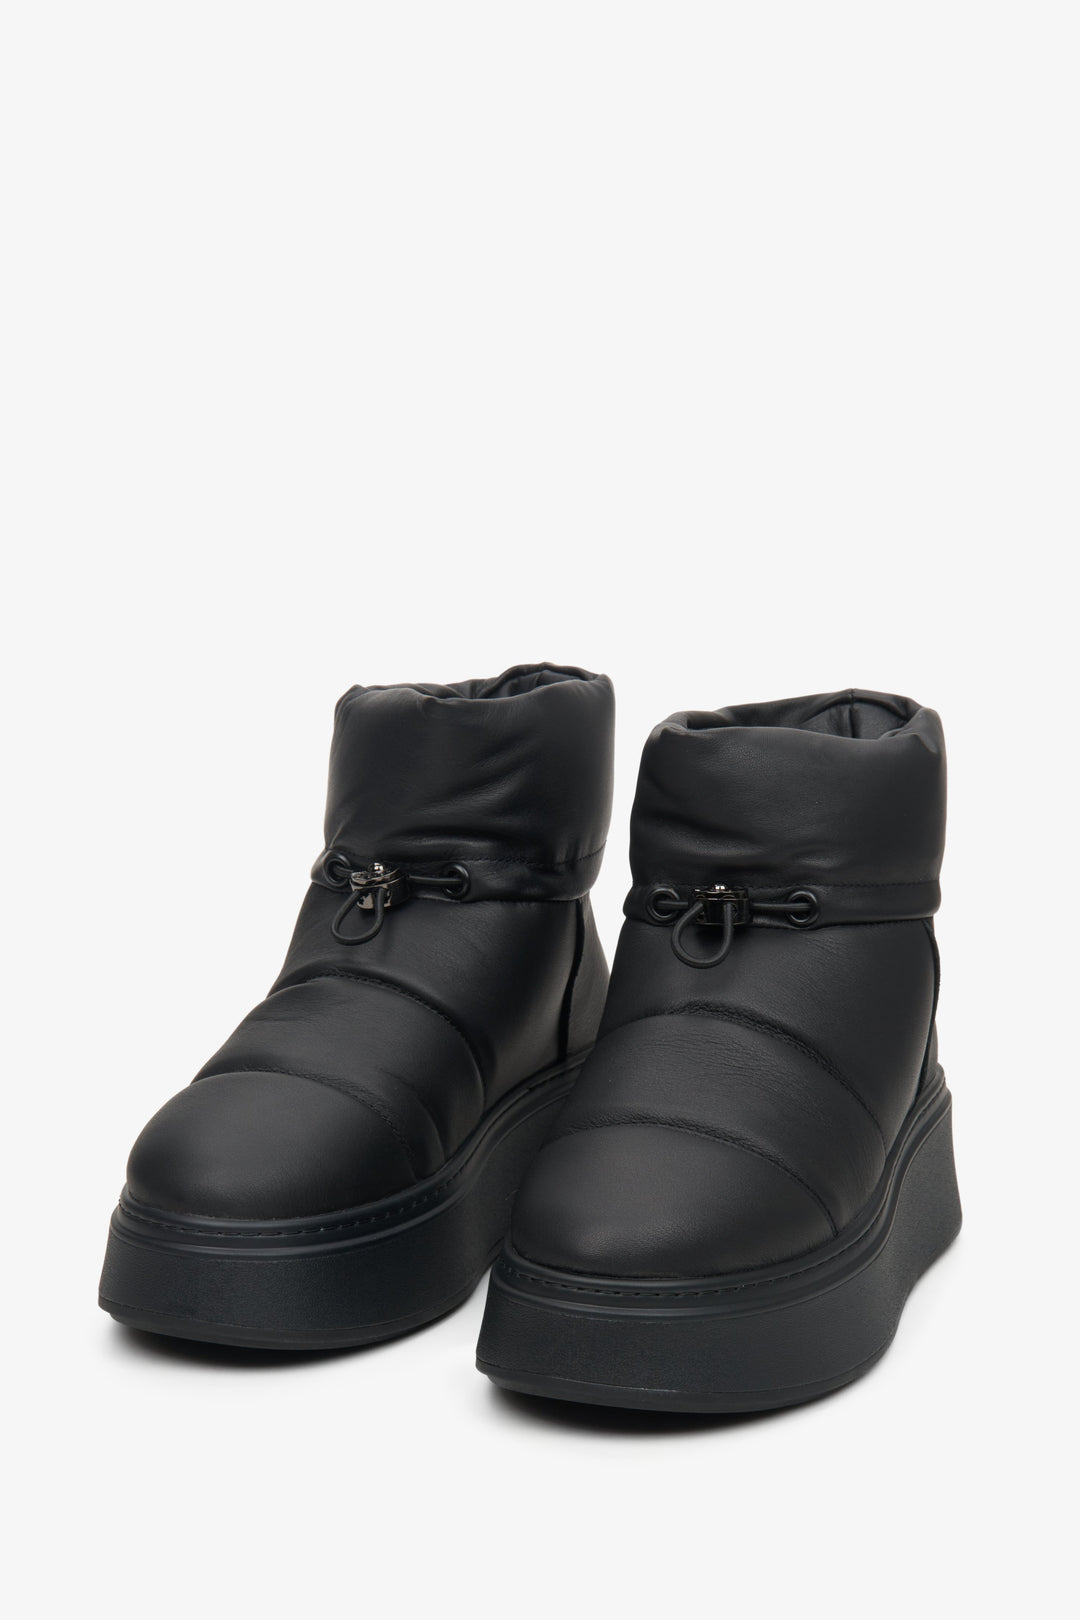 Women's black leather snow boots by Estro.